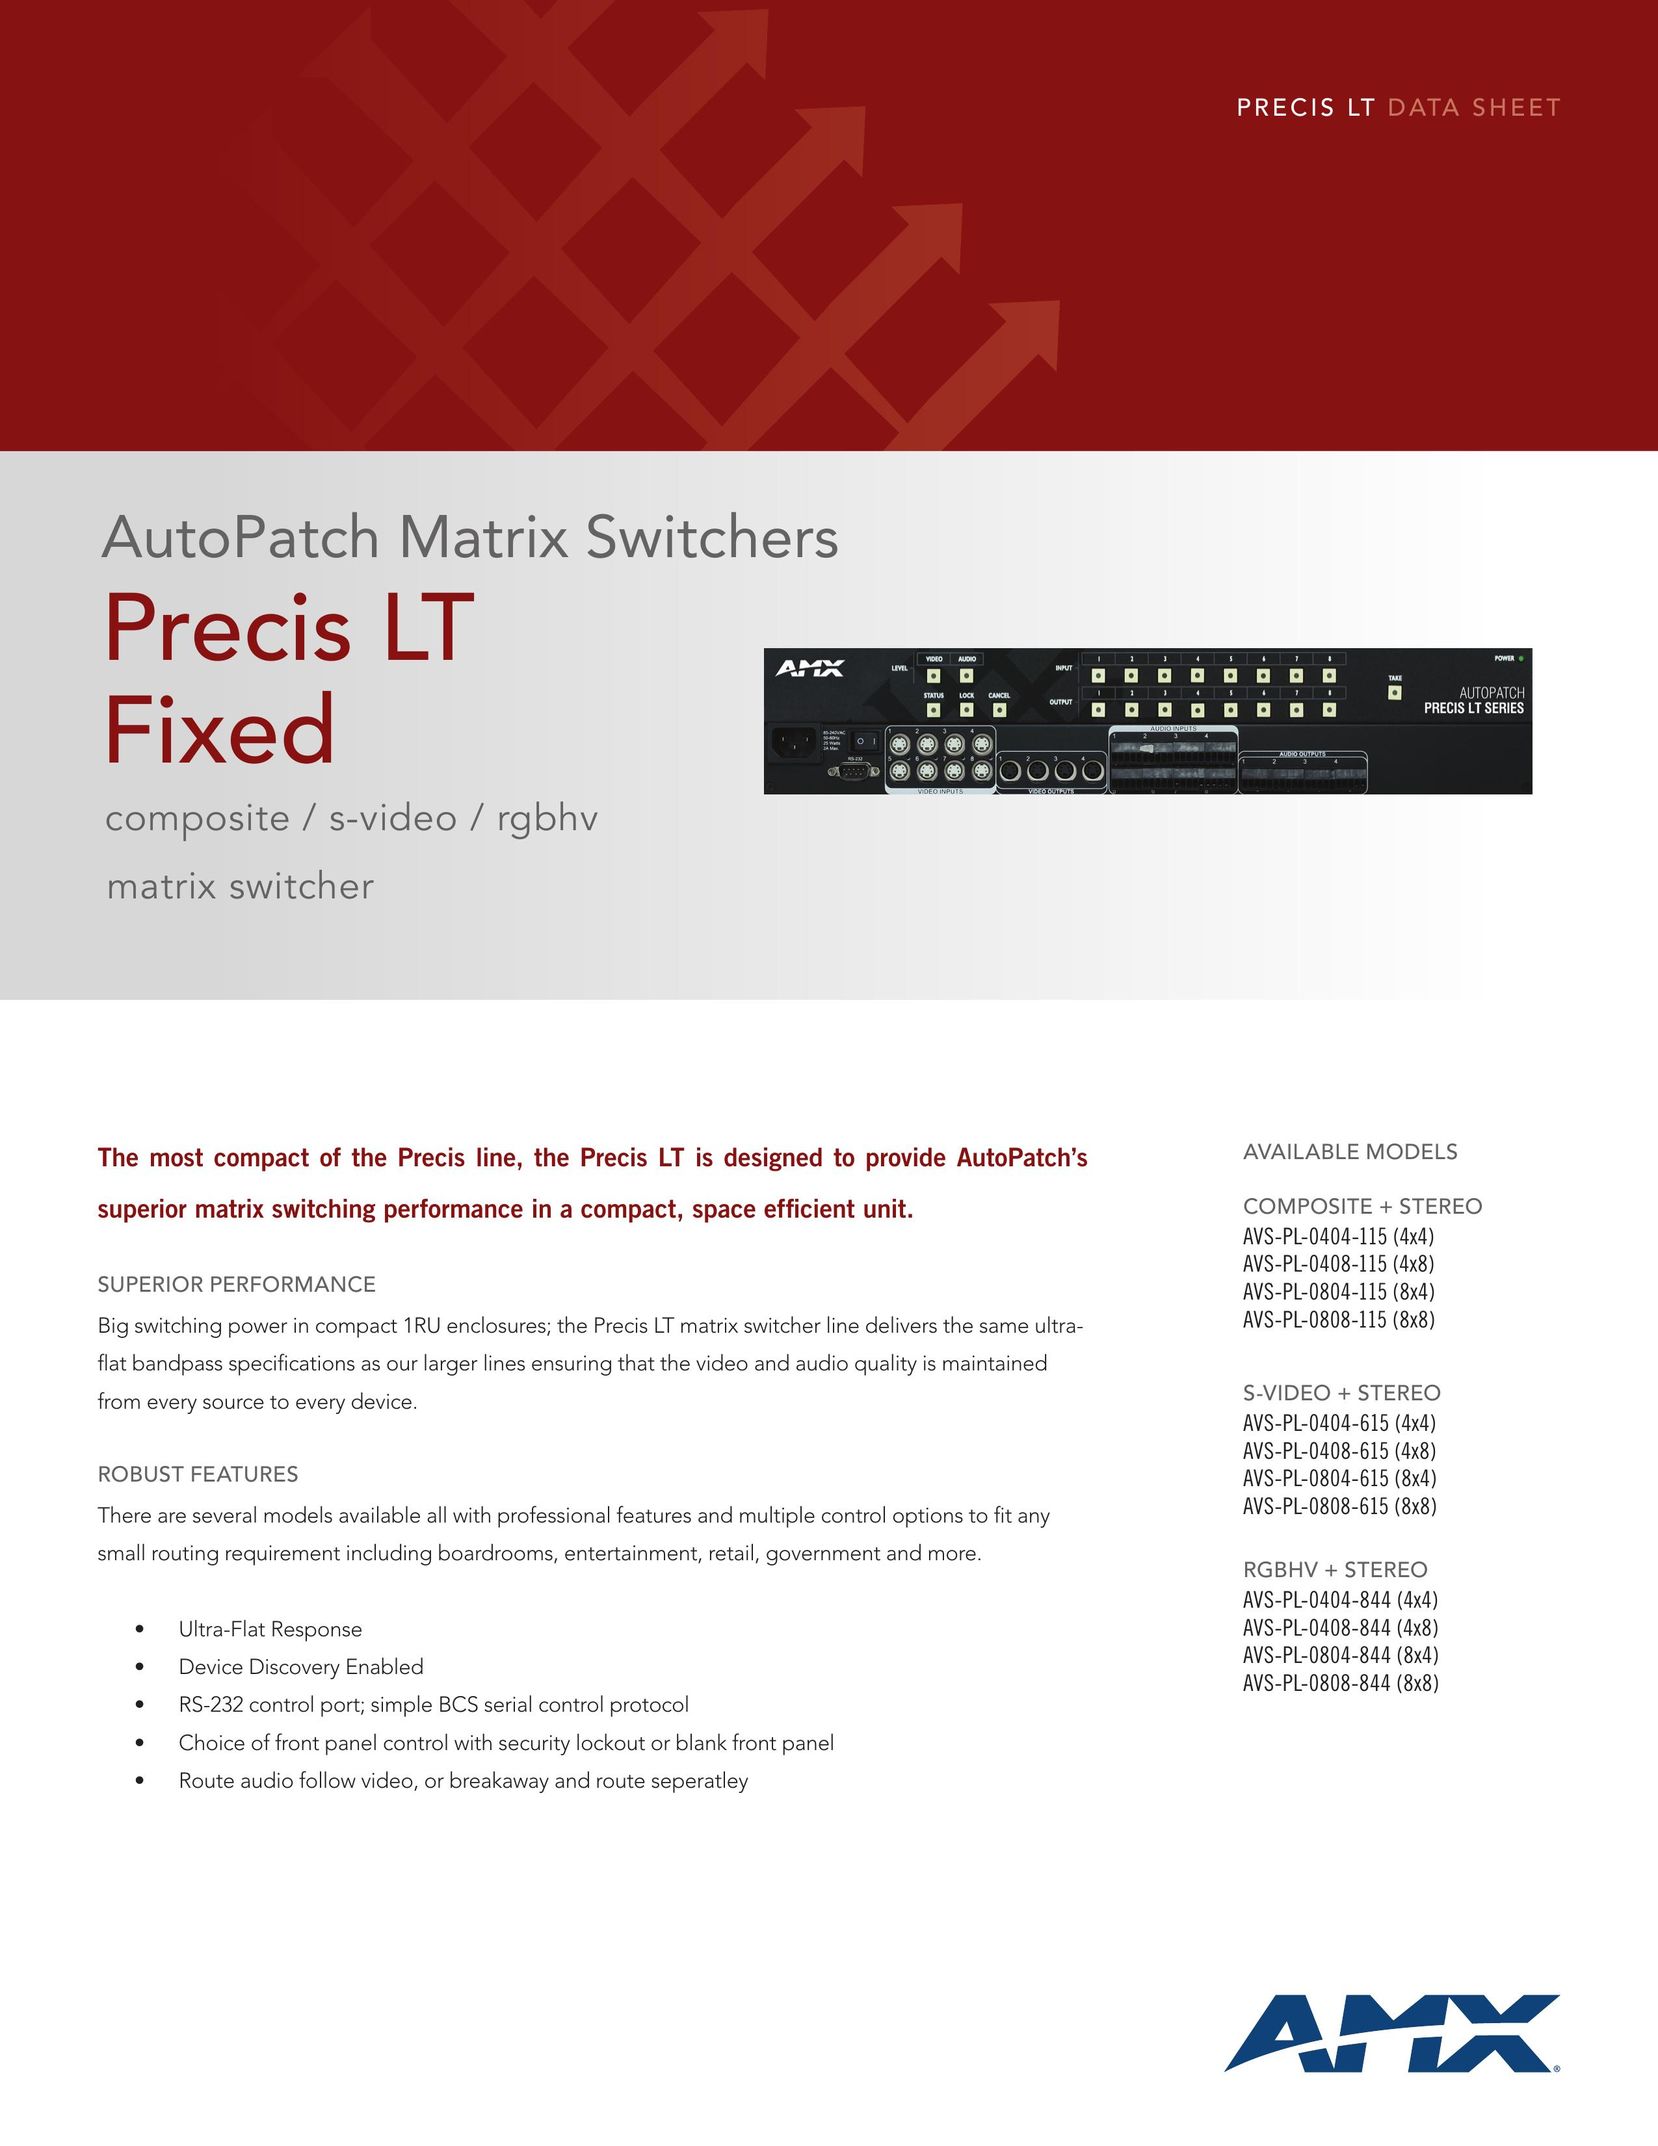 AMX AVS-PL-0808-615 Switch User Manual